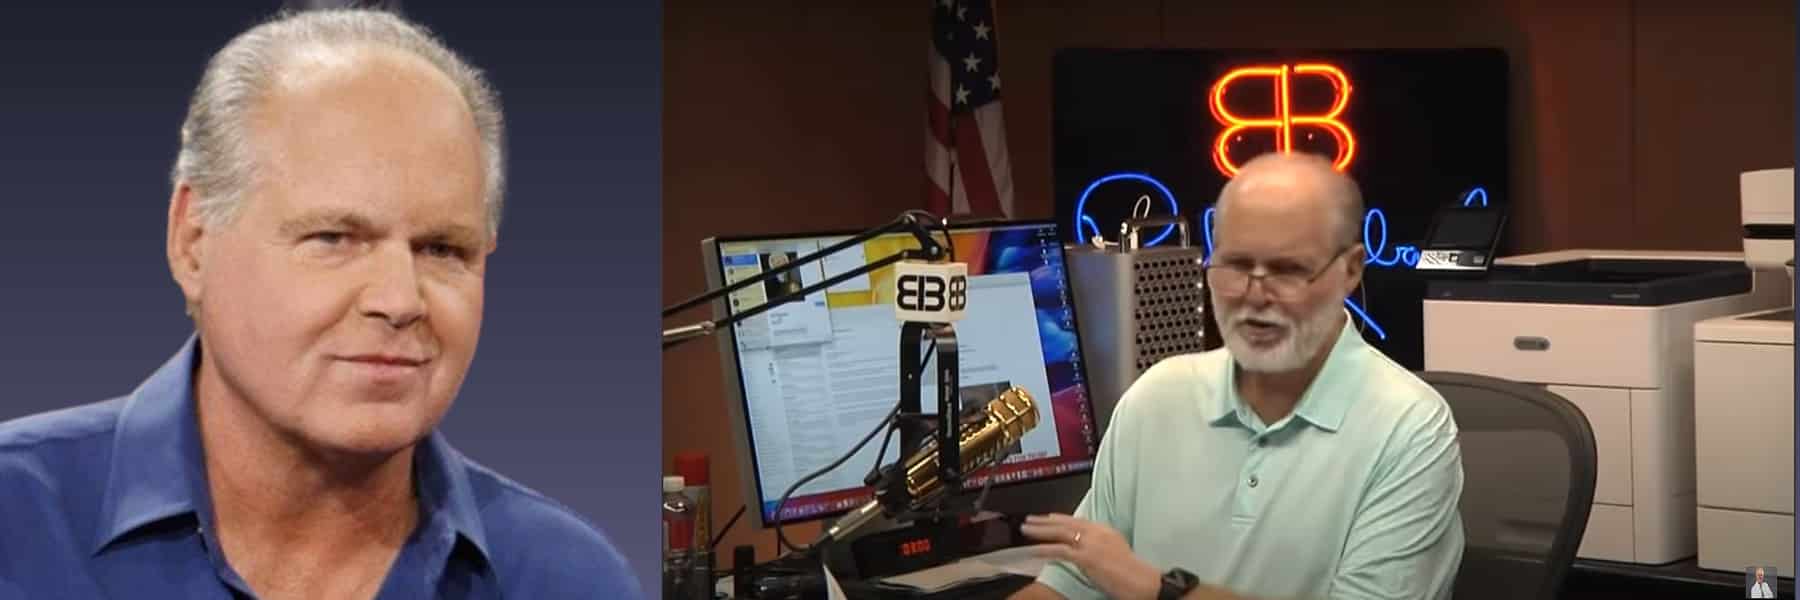 Conservative radio host Rush Limbaugh is dead